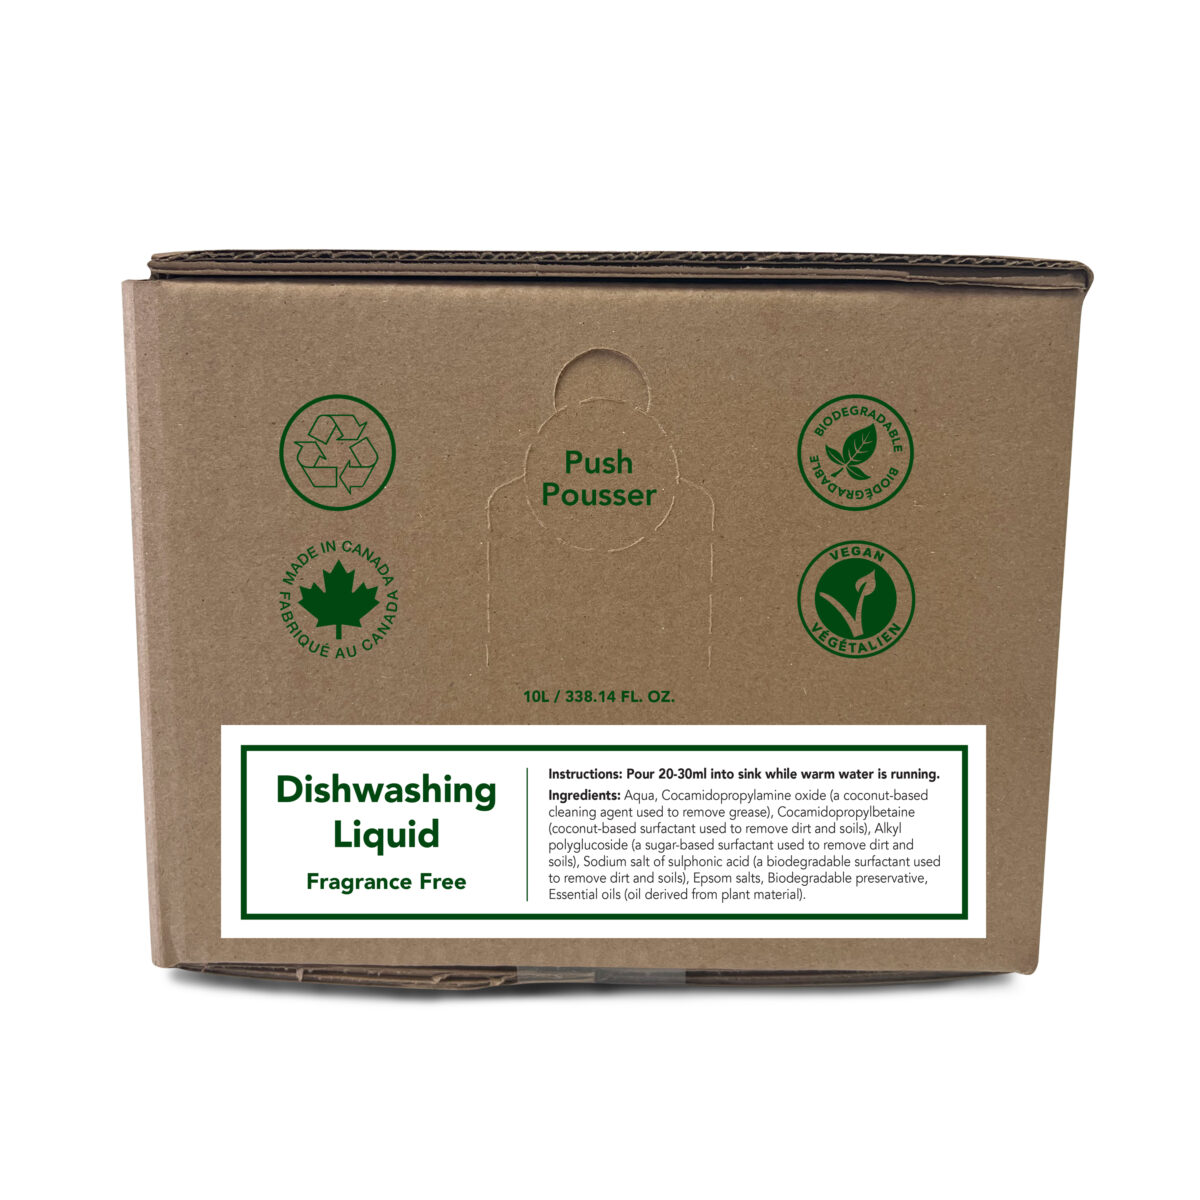 Fragrance Free Dishwashing Liquid (10L) - Bag in Box